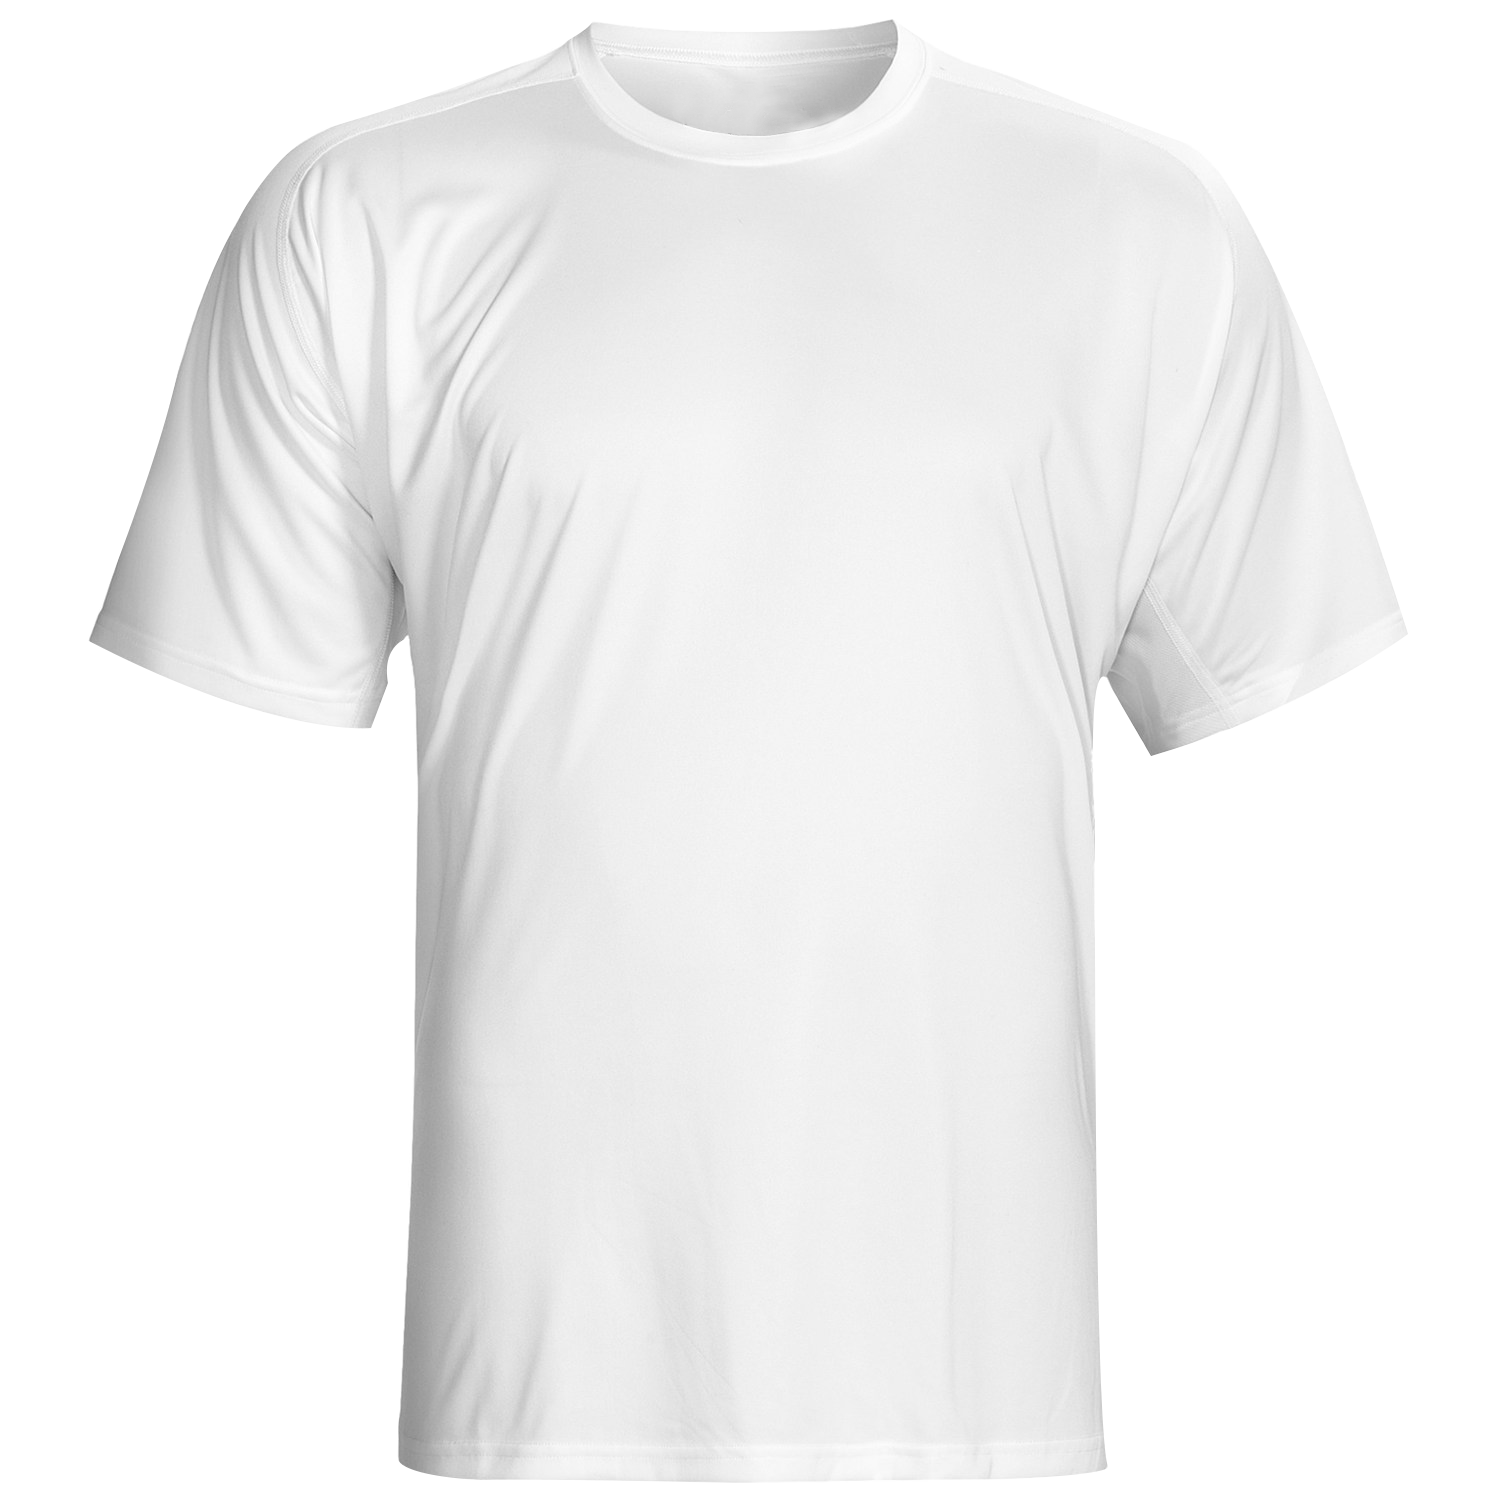 Wholesale Dri-Fit Tee Shirts - Gift